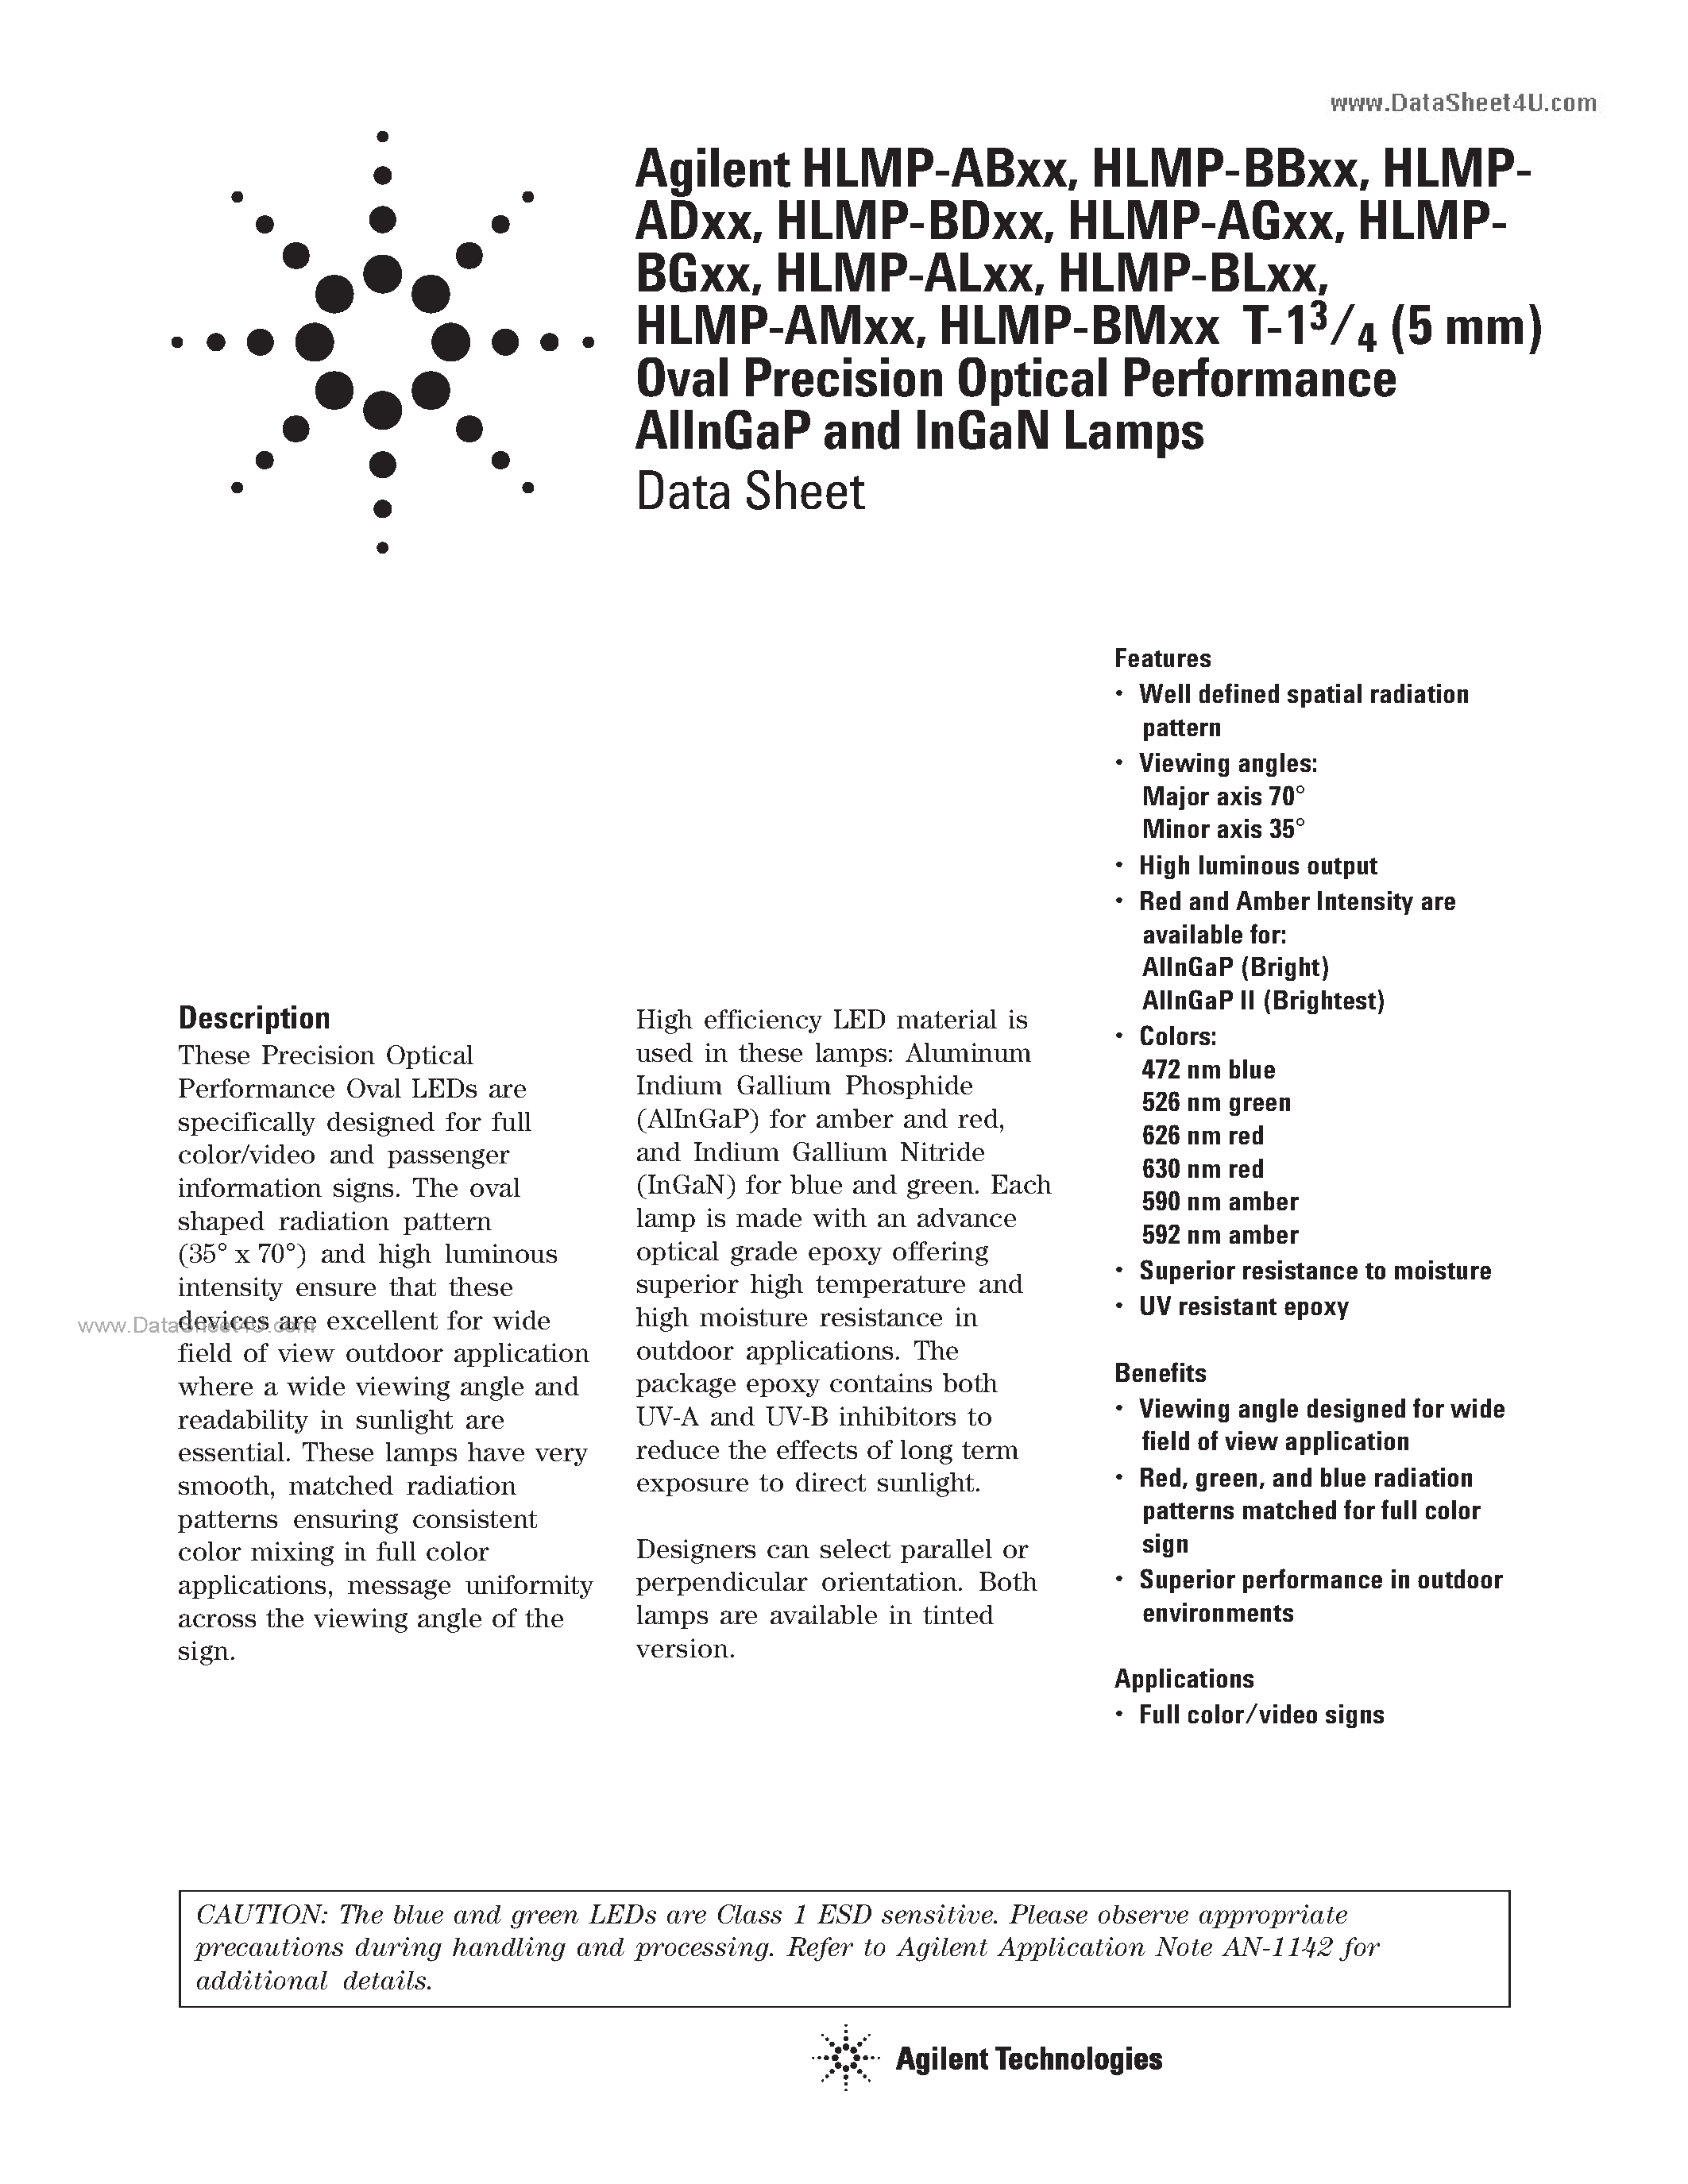 Datasheet HLMP-ABxx - Oval Precision Optical Performance AlInGaP and InGaN Lamps page 1